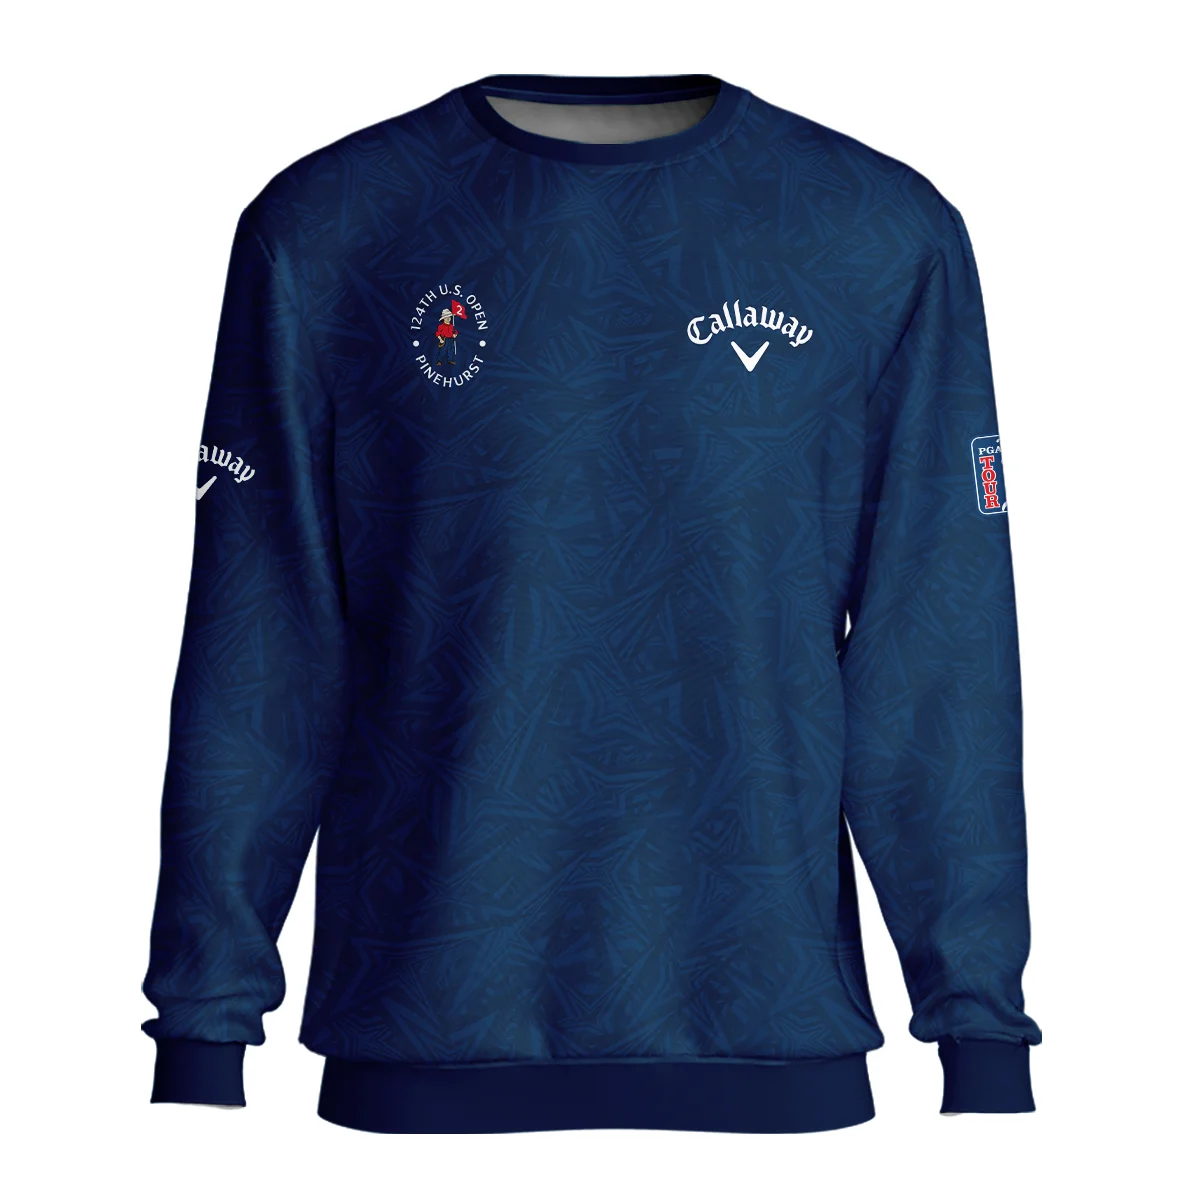 Callaway 124th U.S. Open Pinehurst Stars Gradient Pattern Dark Blue Style Classic, Short Sleeve Polo Shirts Quarter-Zip Casual Slim Fit Mock Neck Basic